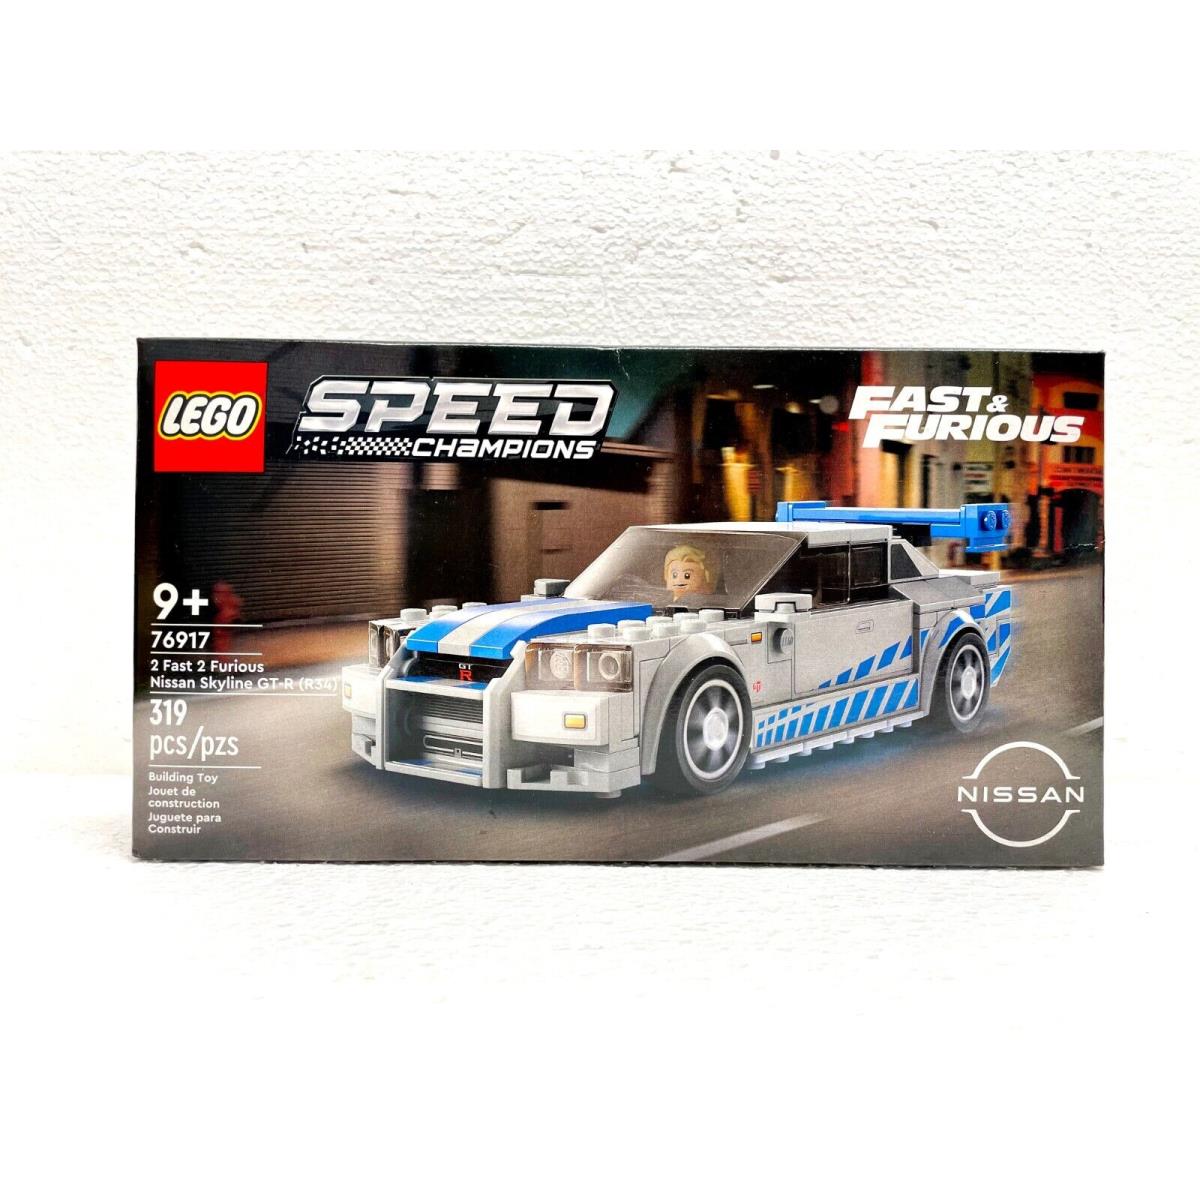 Lego 76917 Speed Champions 2 Fast 2 Furious Nissan Skyline Gt-r R34